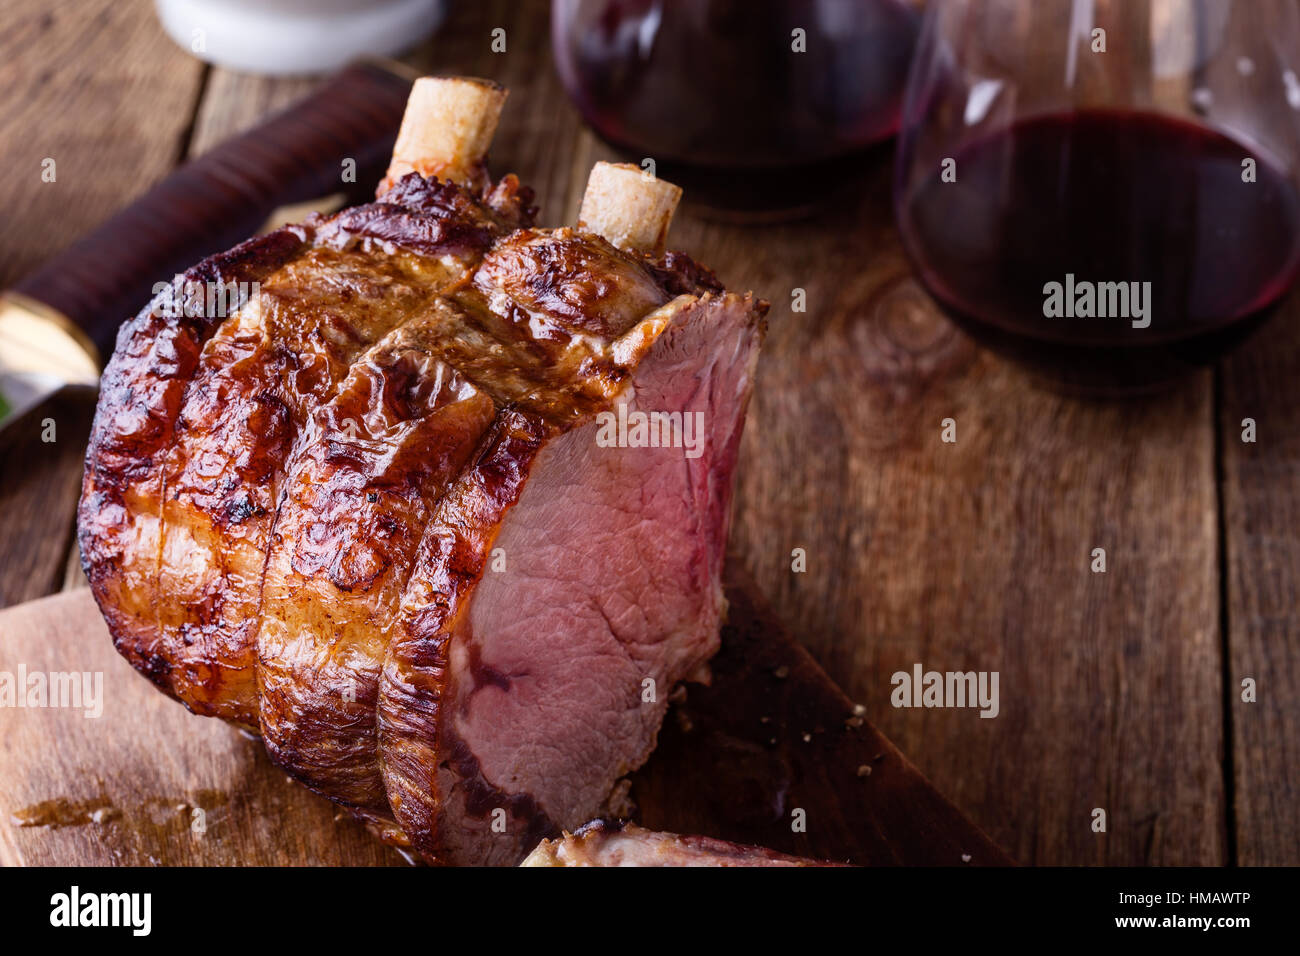 https://c8.alamy.com/comp/HMAWTP/homemade-bone-in-prime-rib-roast-HMAWTP.jpg